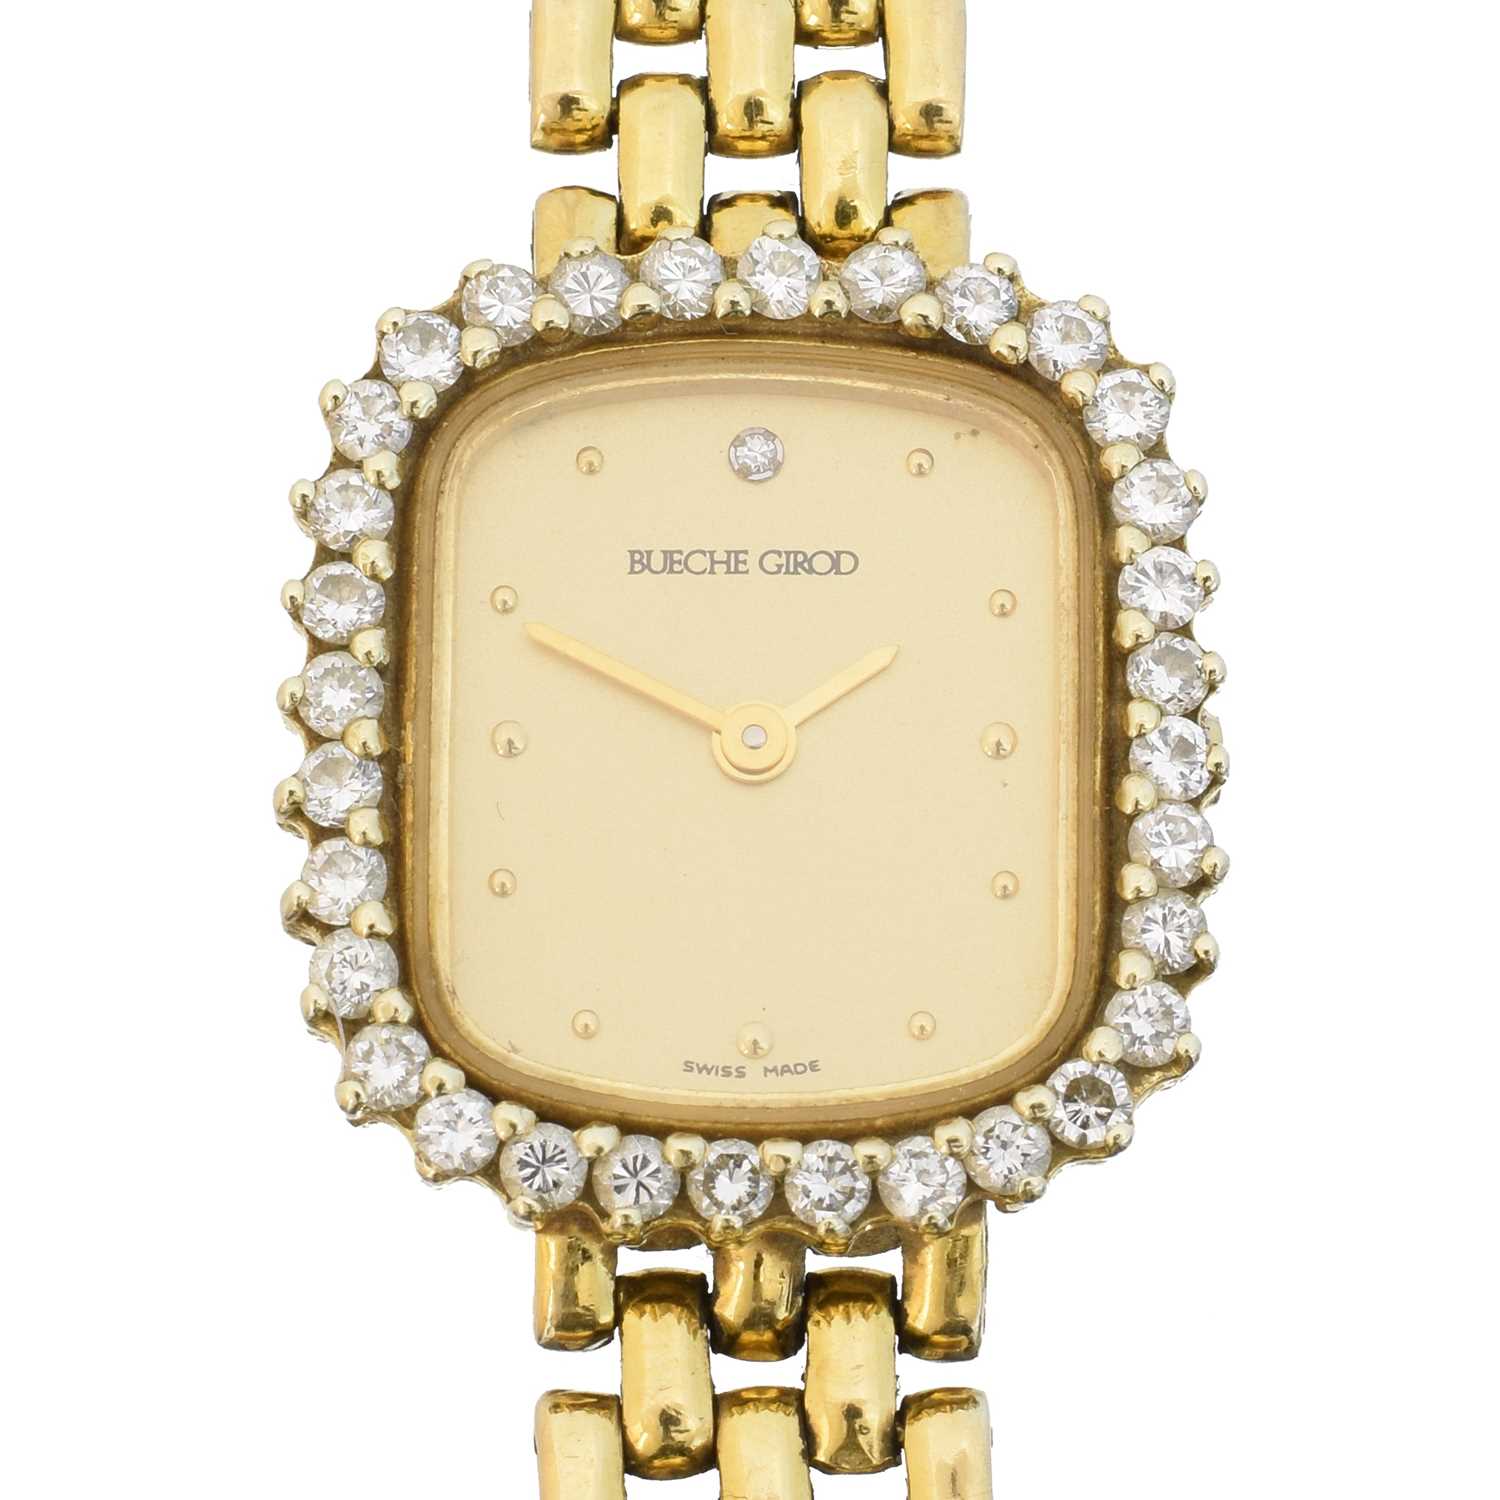 174 - A 9ct gold and diamond Bueche Girod wristwatch,